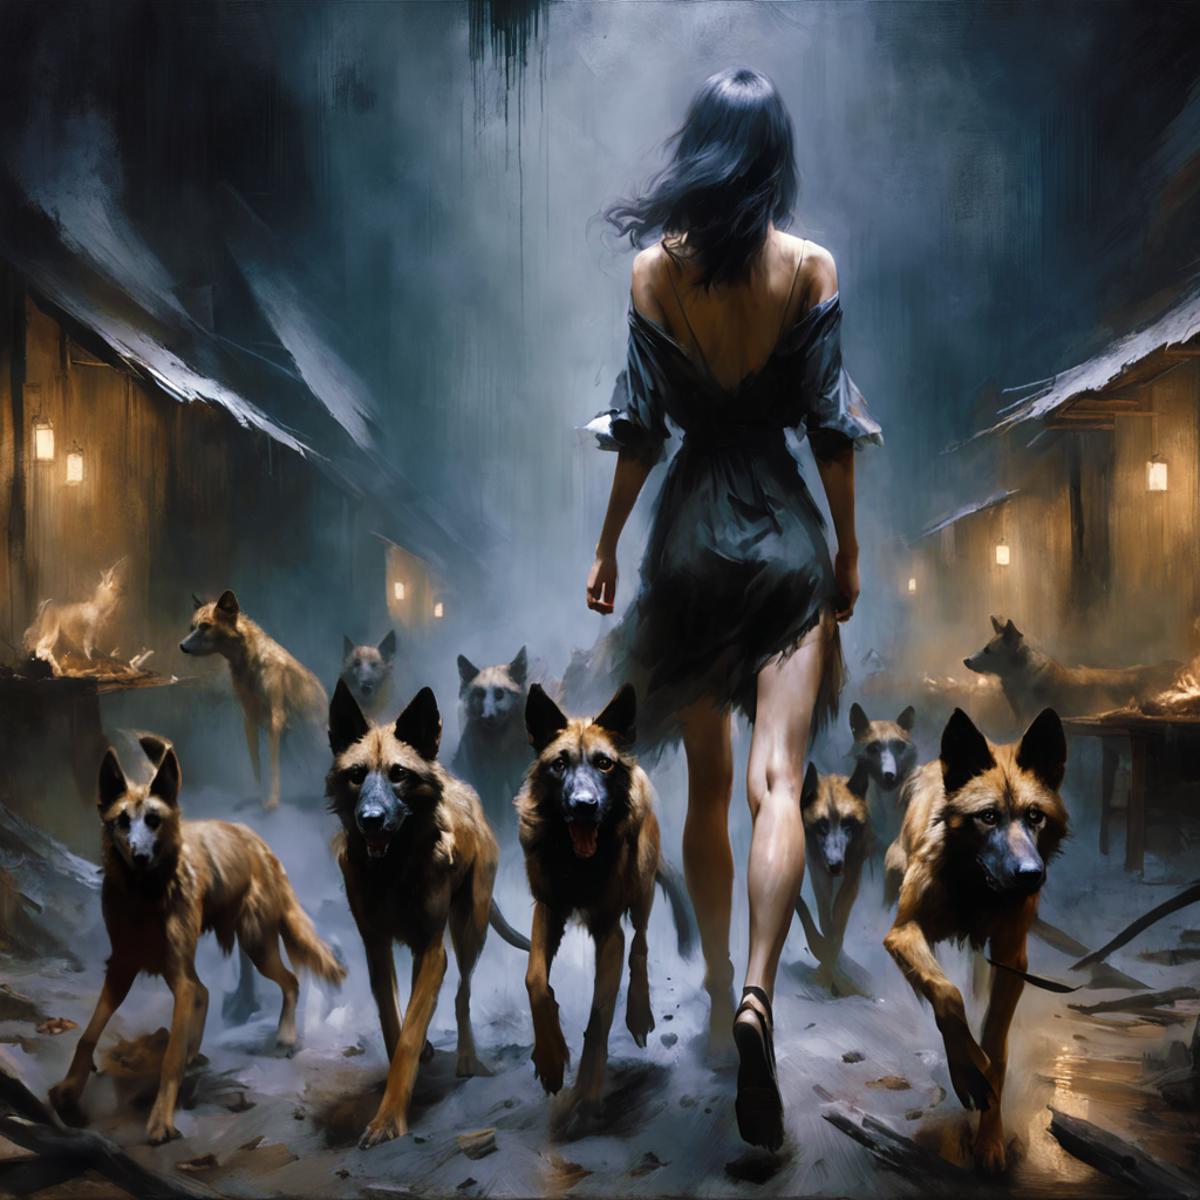 A woman walking through a dark, eerie room filled with large German Shepherds.